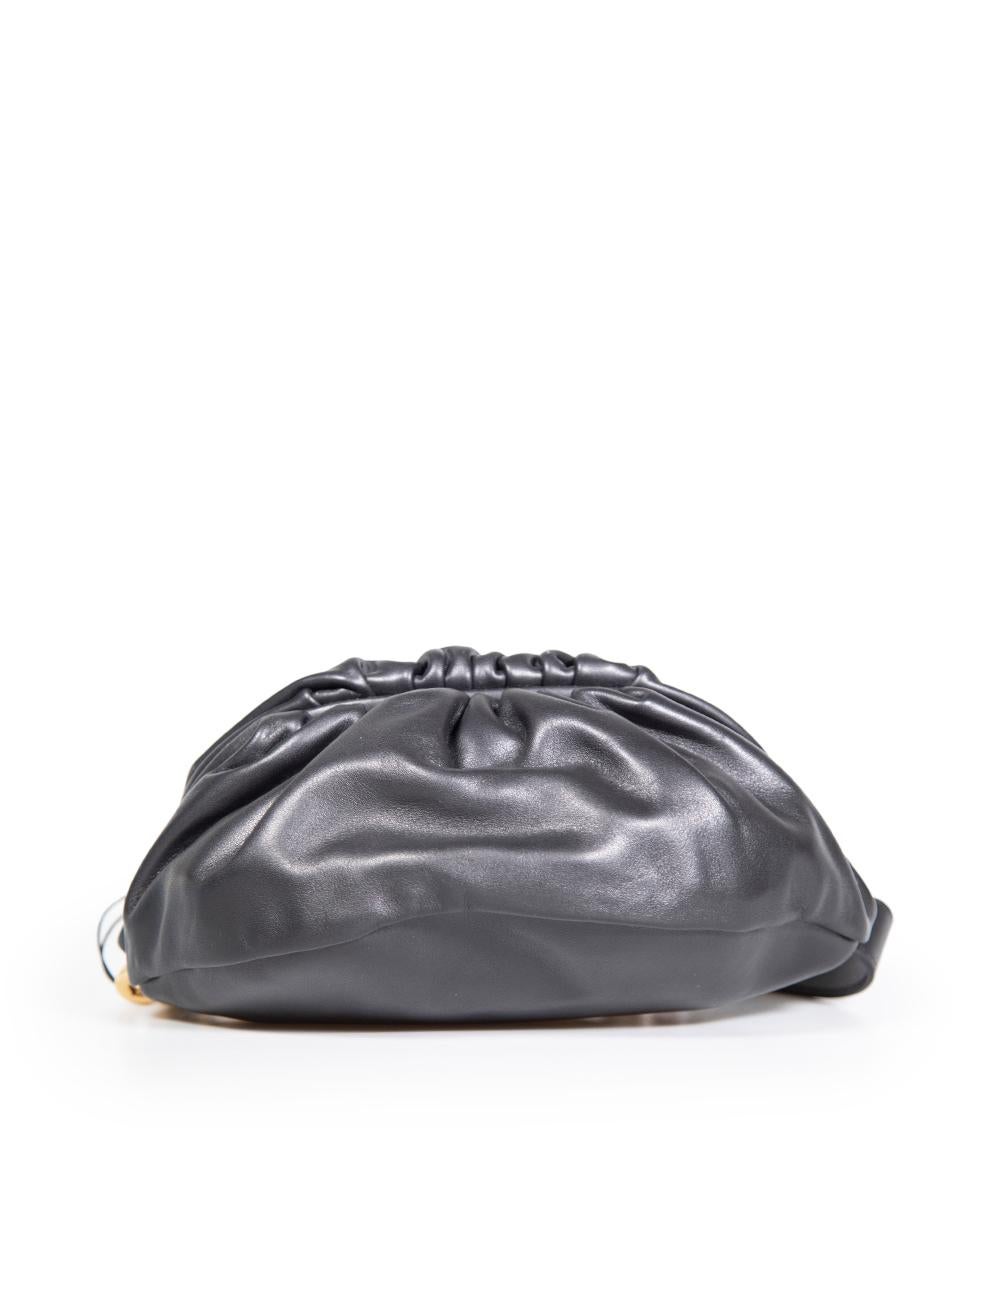 Bottega Veneta Black Leather Chain Pouch Crossbody Bag For Sale 1